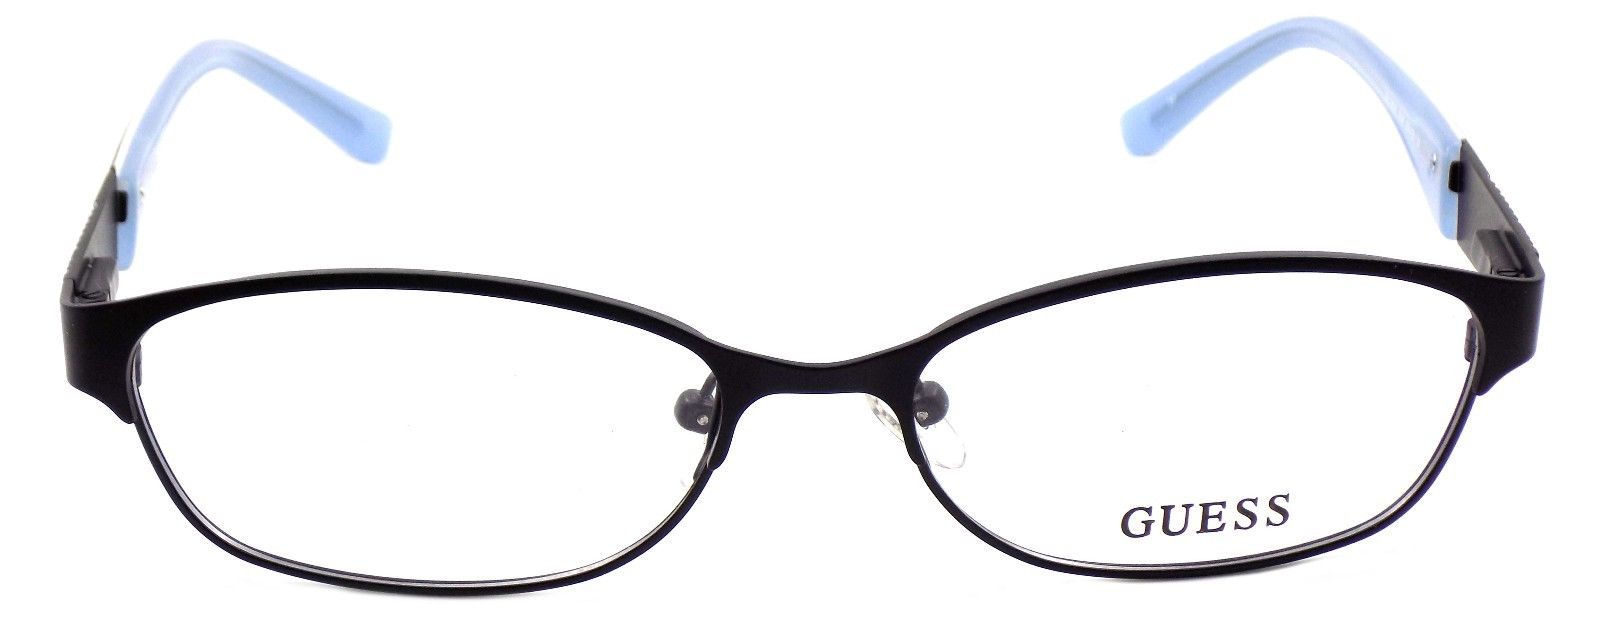 2-GUESS GU2353 BLK Women's Eyeglasses Frames 53-16-135 Black + CASE-715583650985-IKSpecs